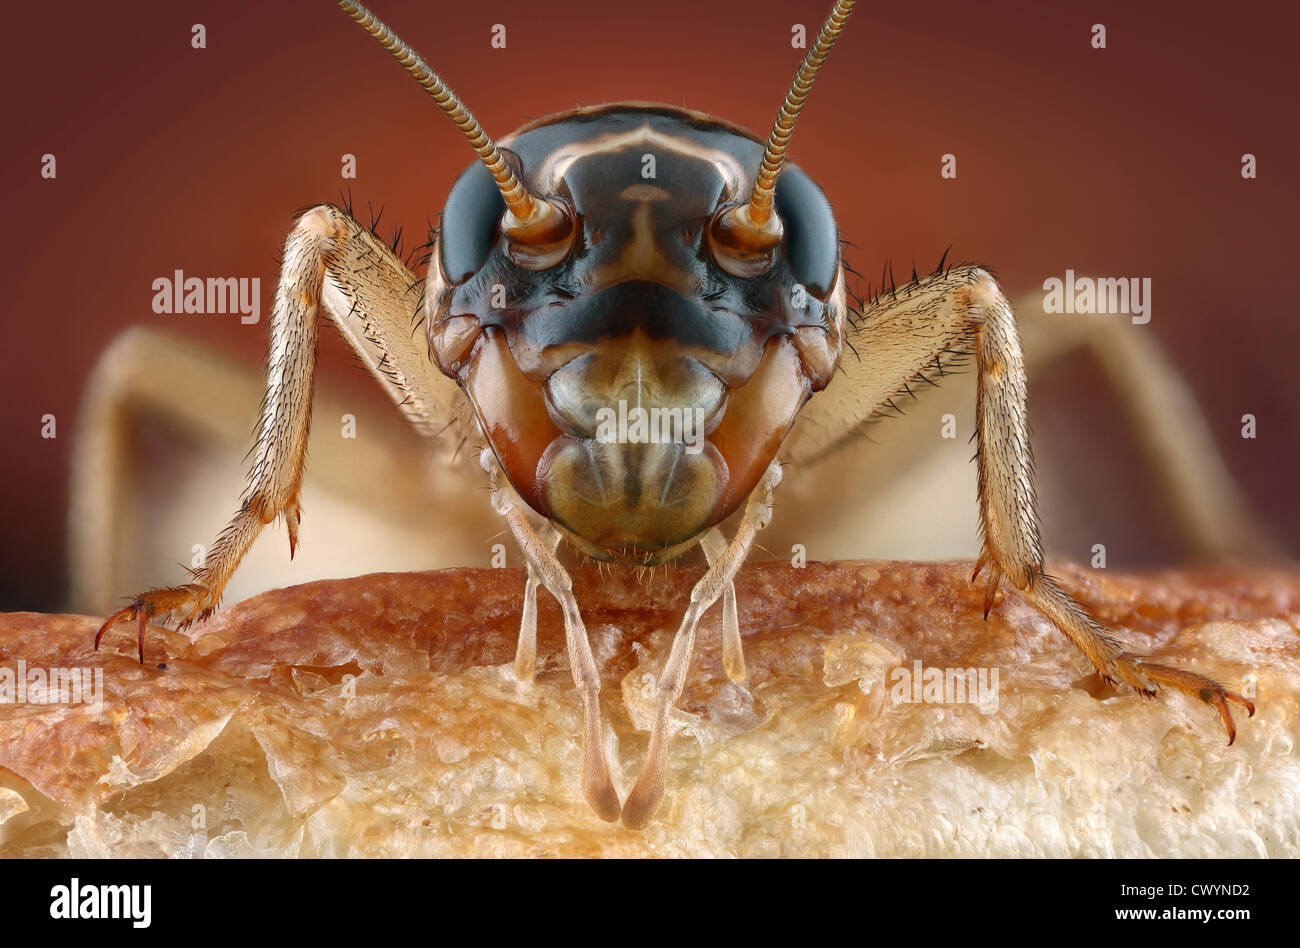 Head of a house cricket (Acheta domestica) on bread, macro shot Stock Photo